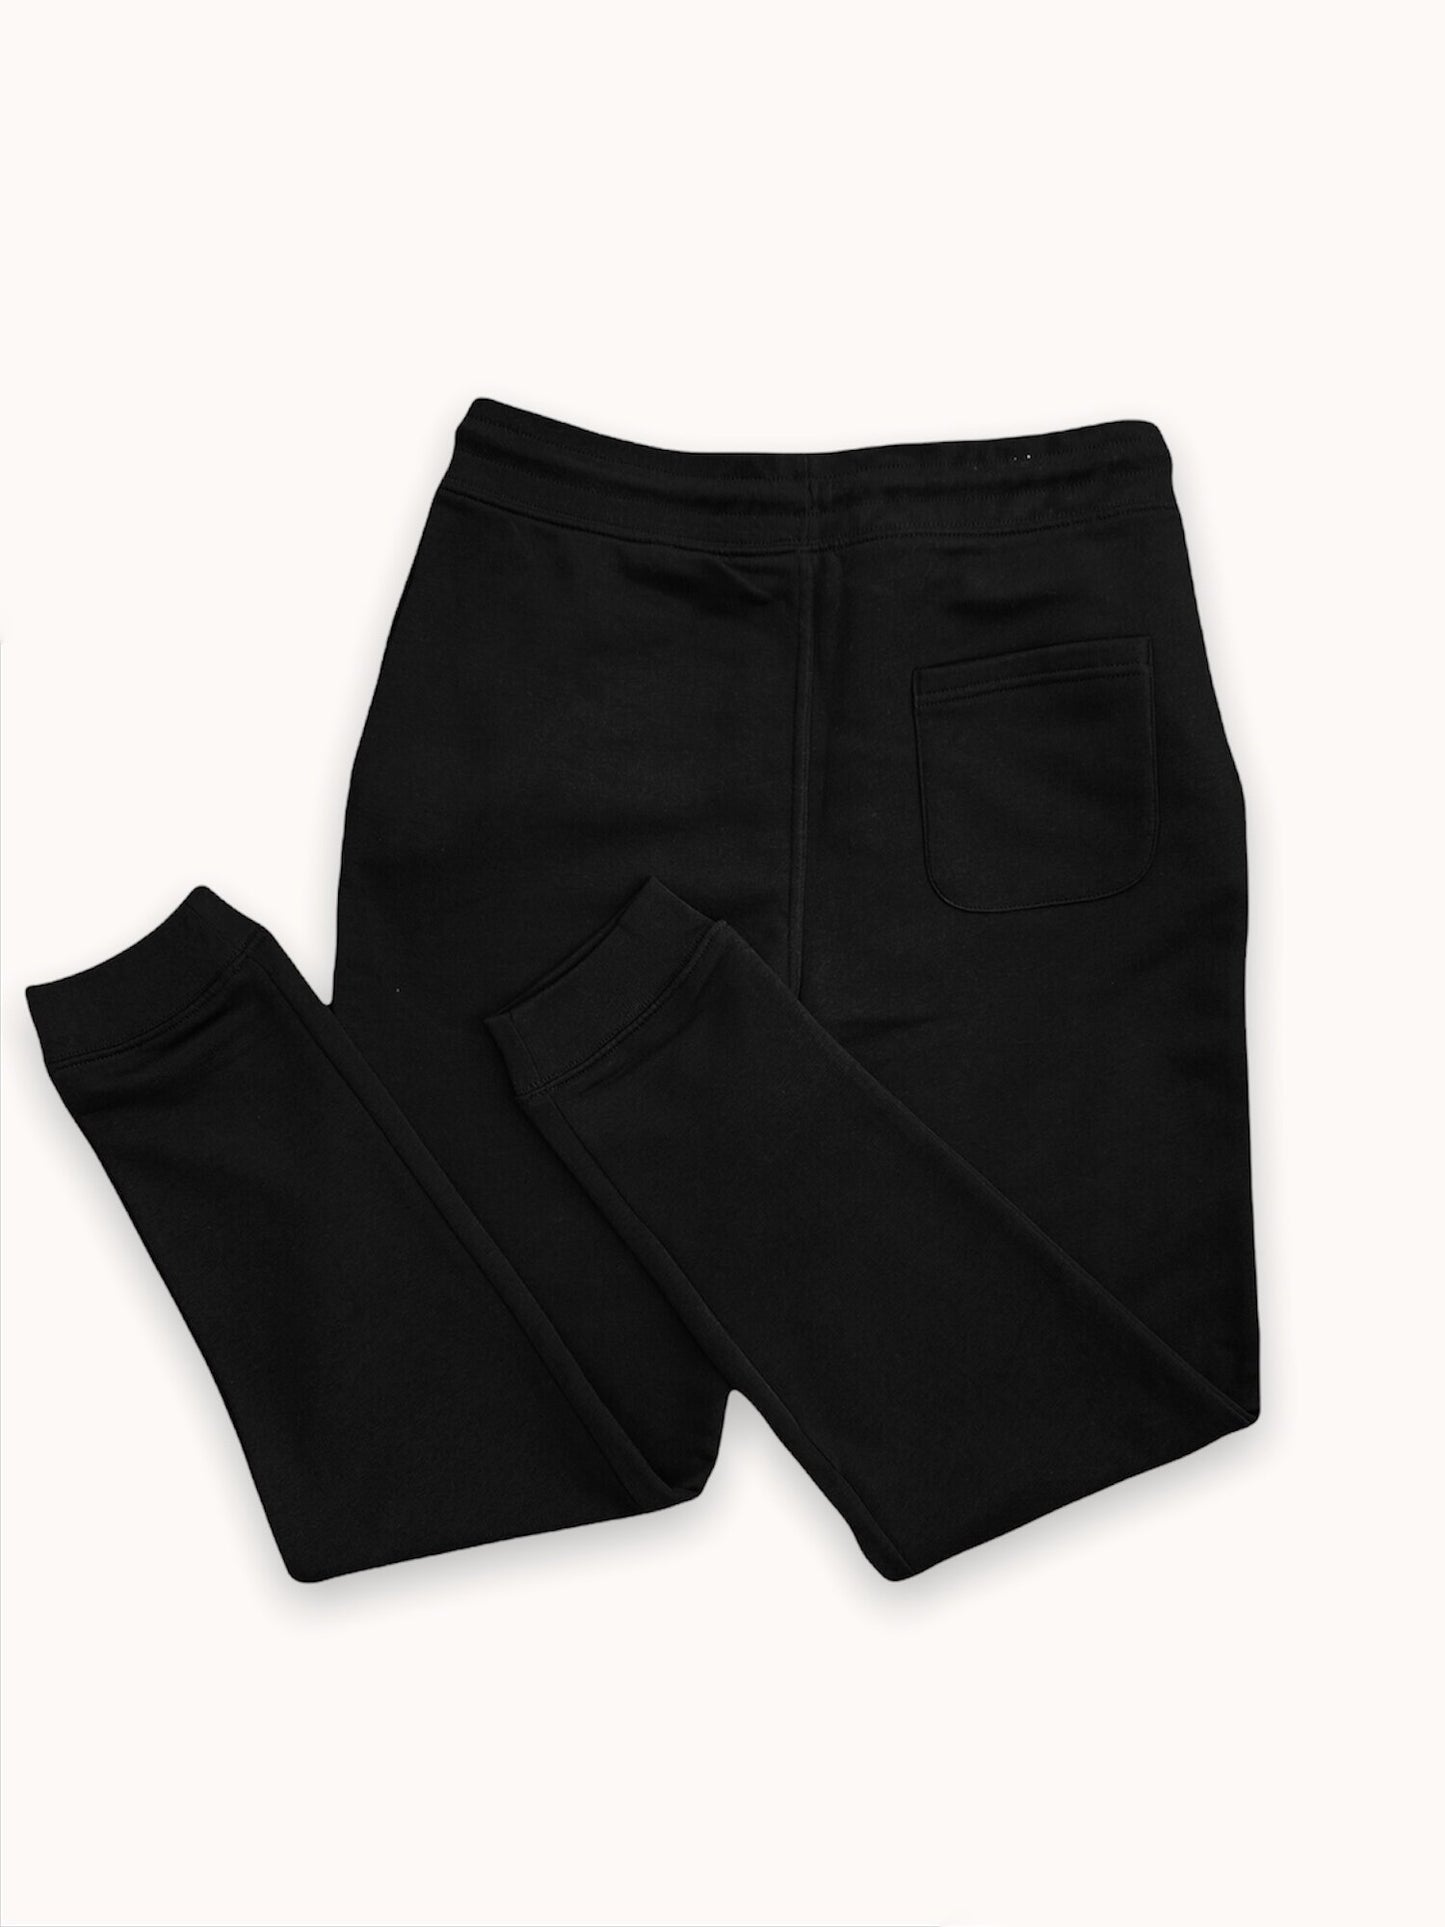 
                  
                    SV Italic Sweatpants - Black
                  
                